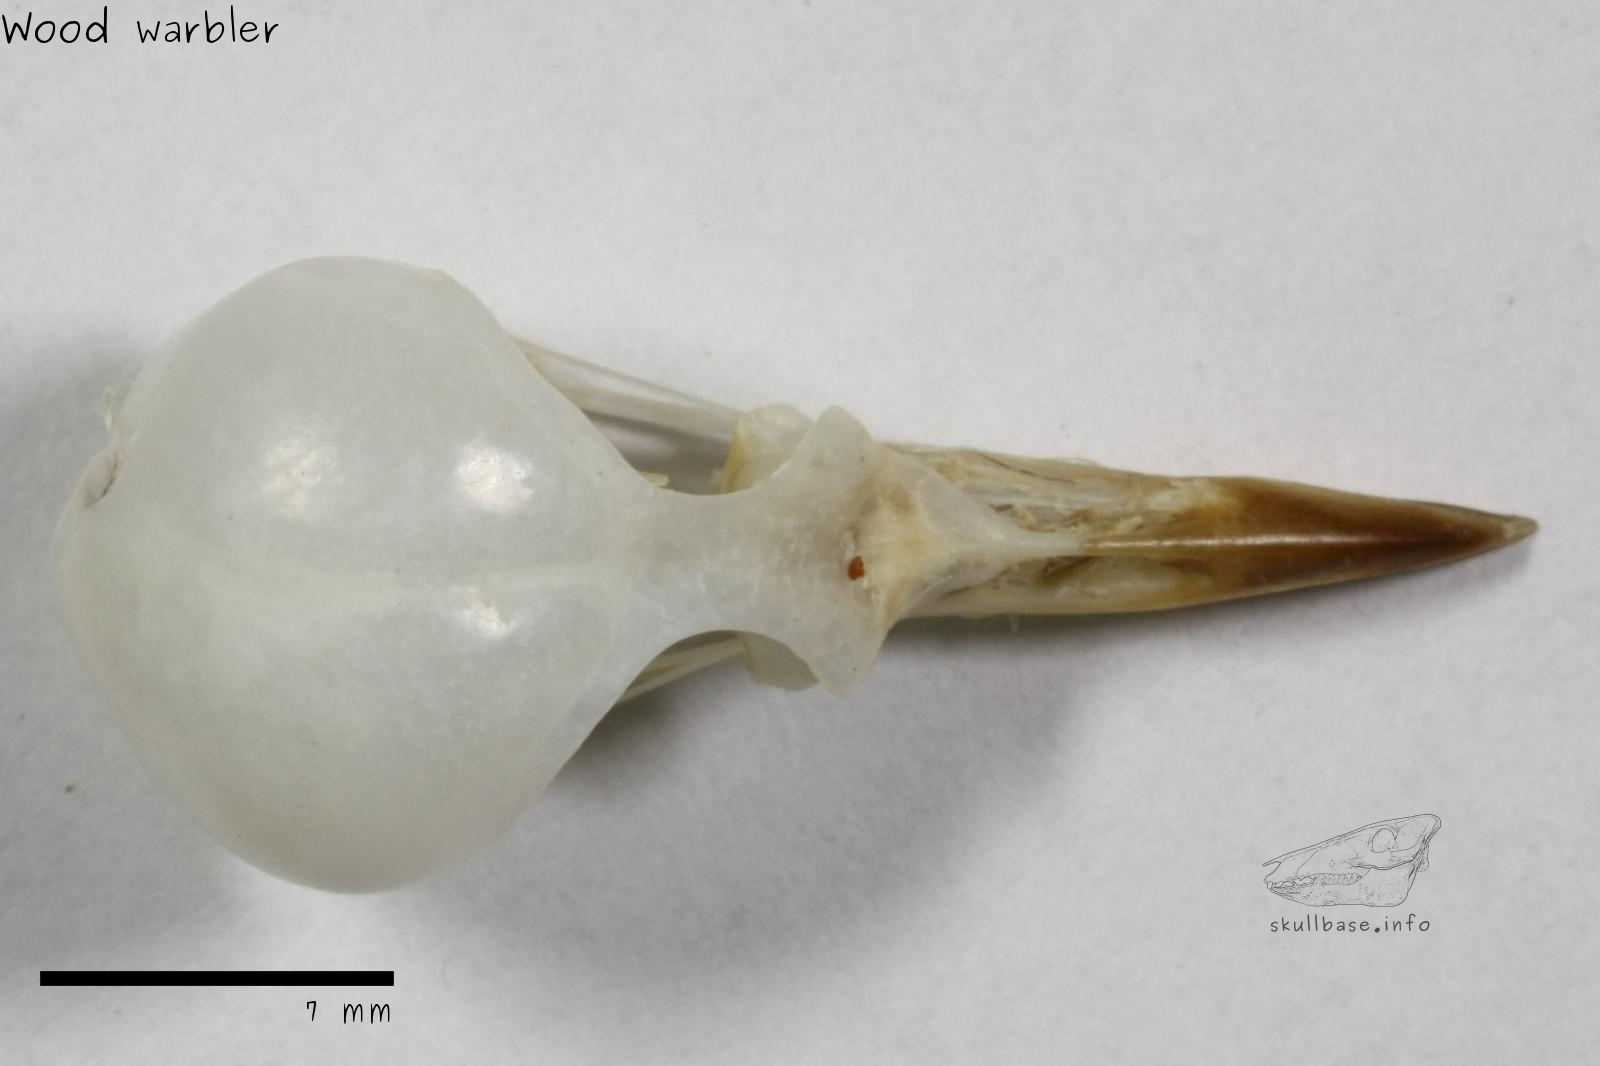 Wood warbler (Phylloscopus sibilatrix) skull dorsal view